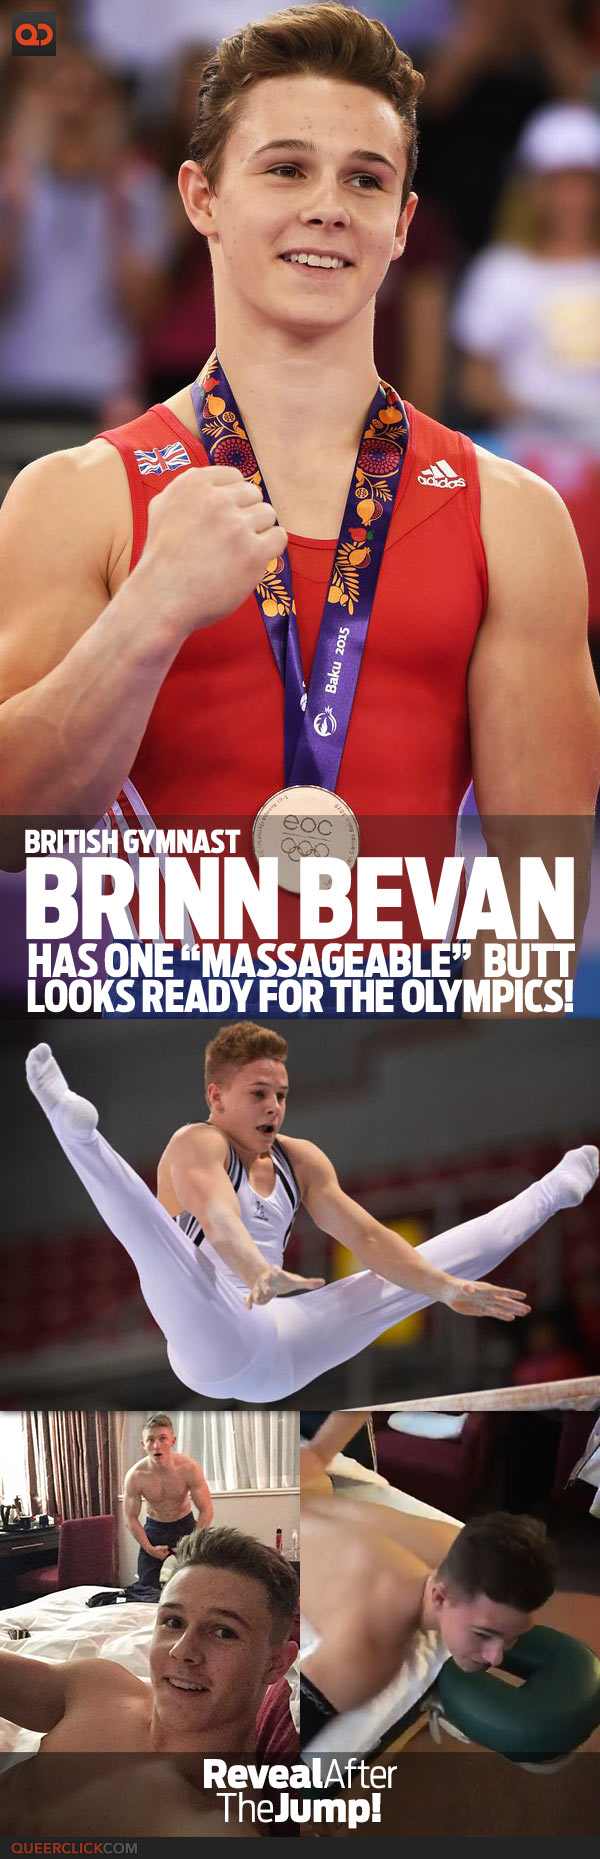 qc-exposed_celeb_british_gymnast_brinn_bevan_has_a_massageable_butt-teaser